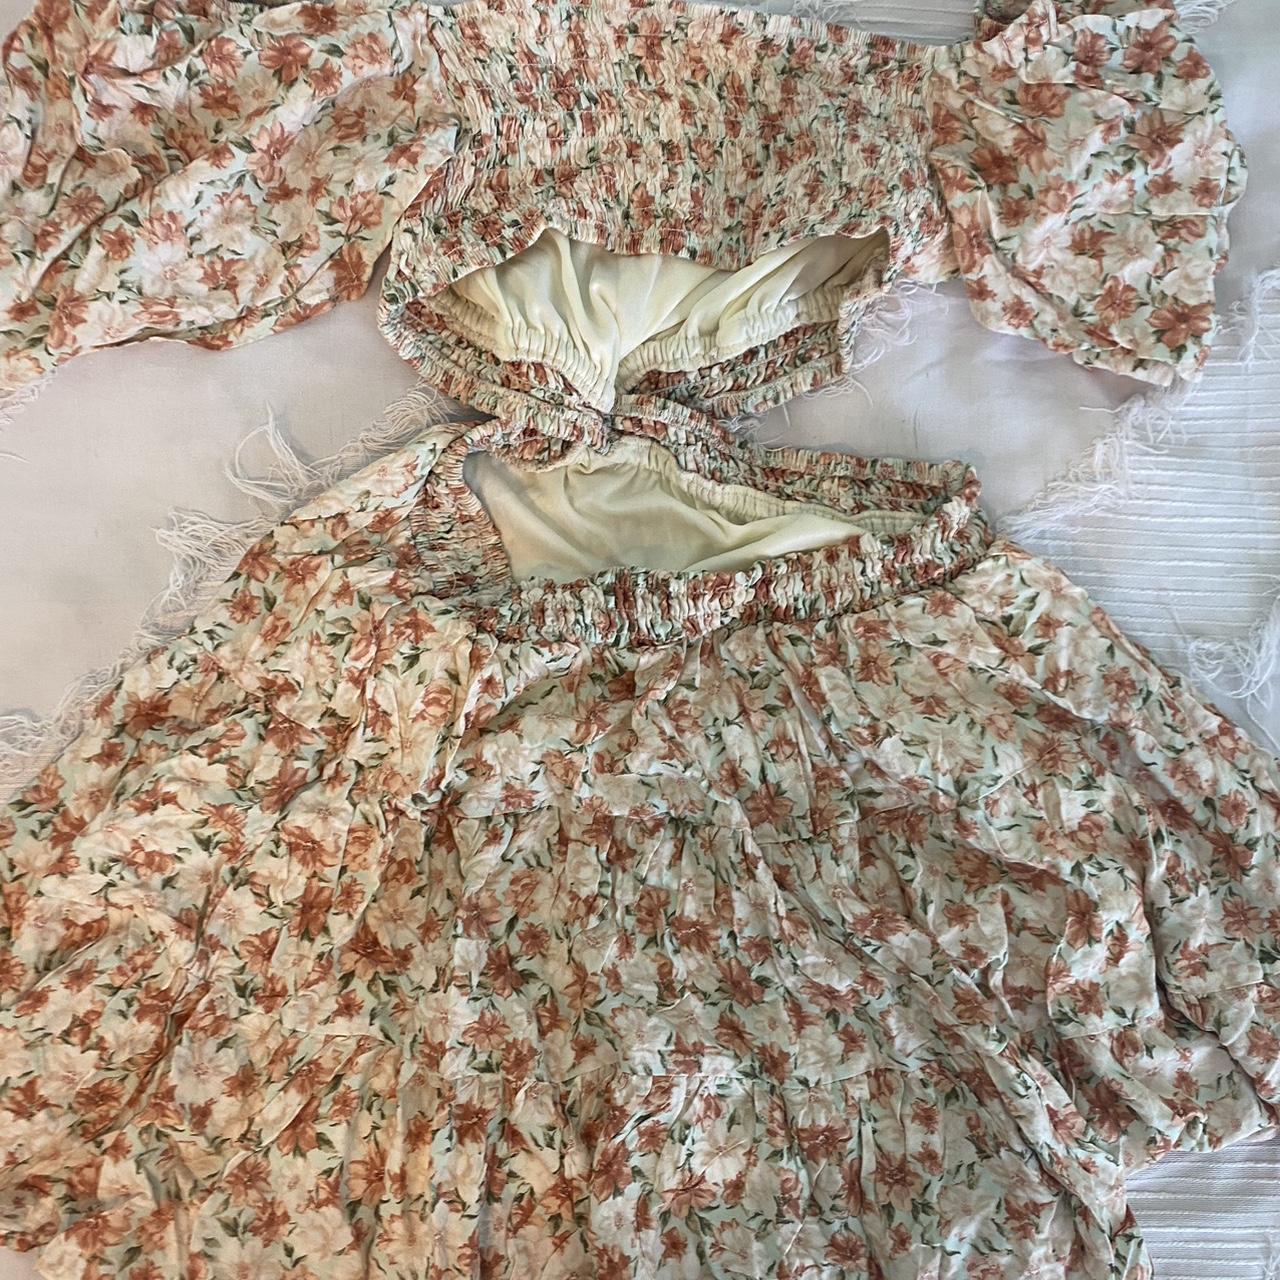 Cute crossover floral dress - Depop